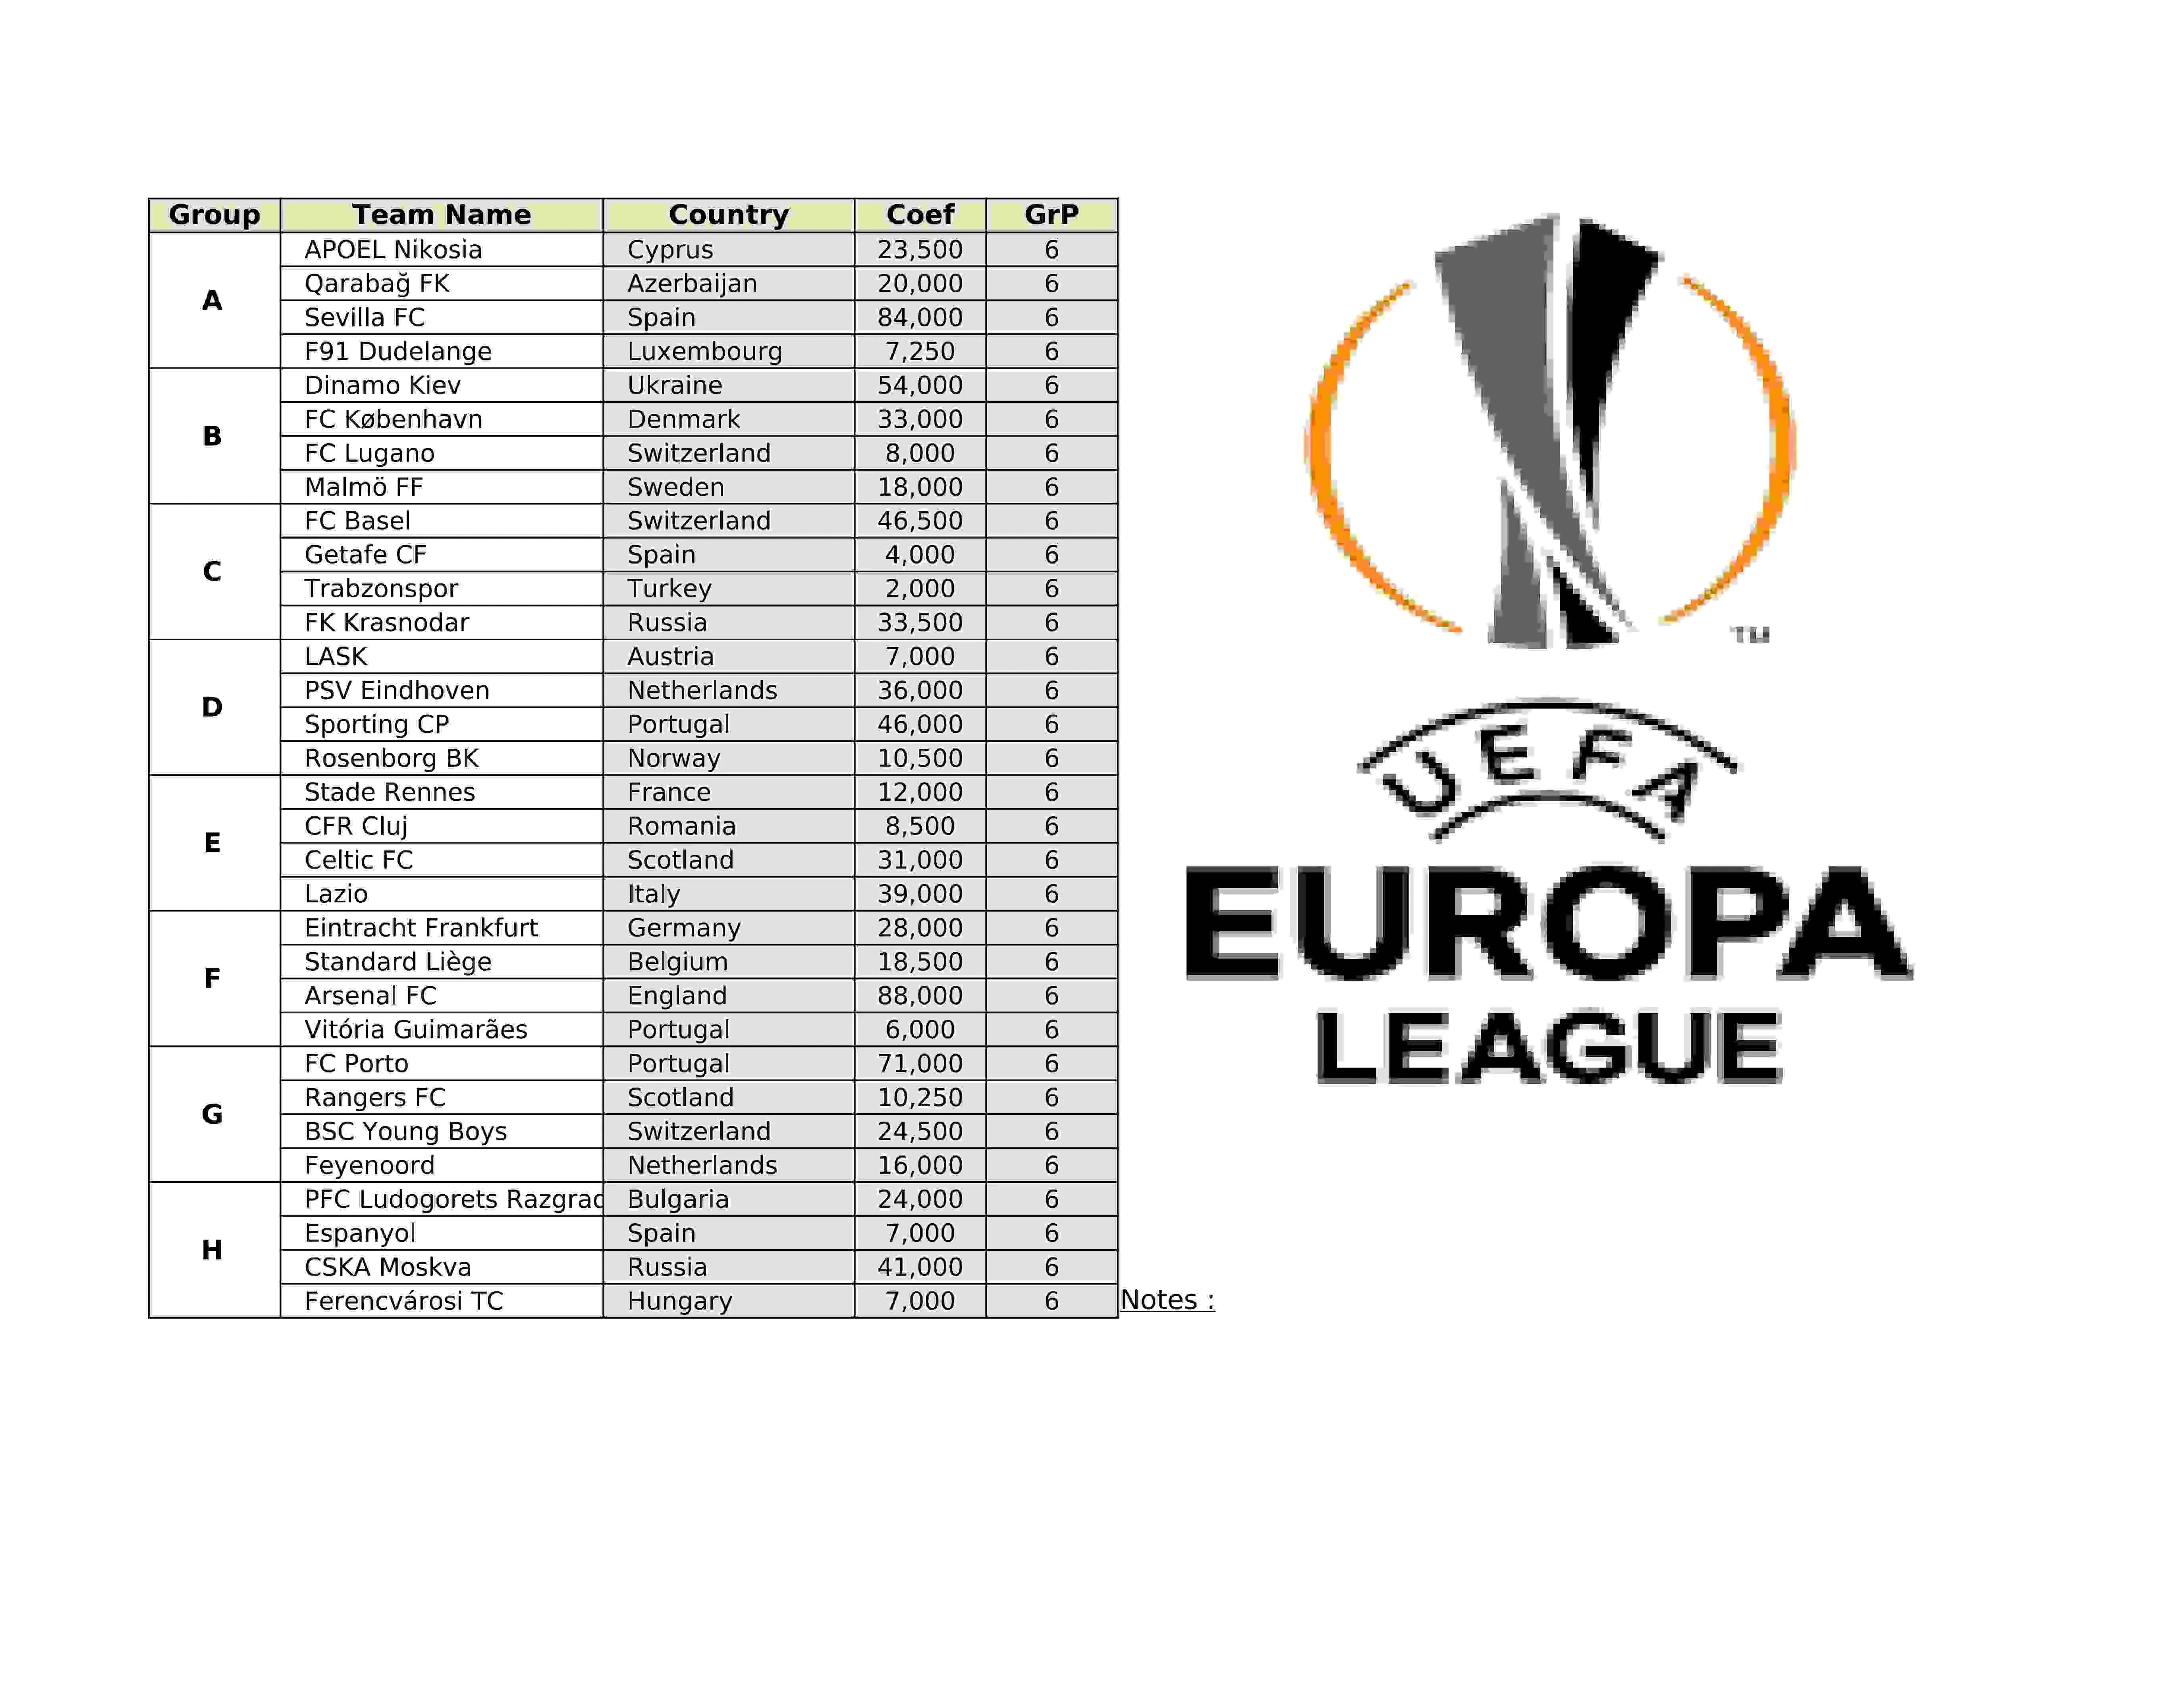 UEFA Europa League 2019 2020 V1 67